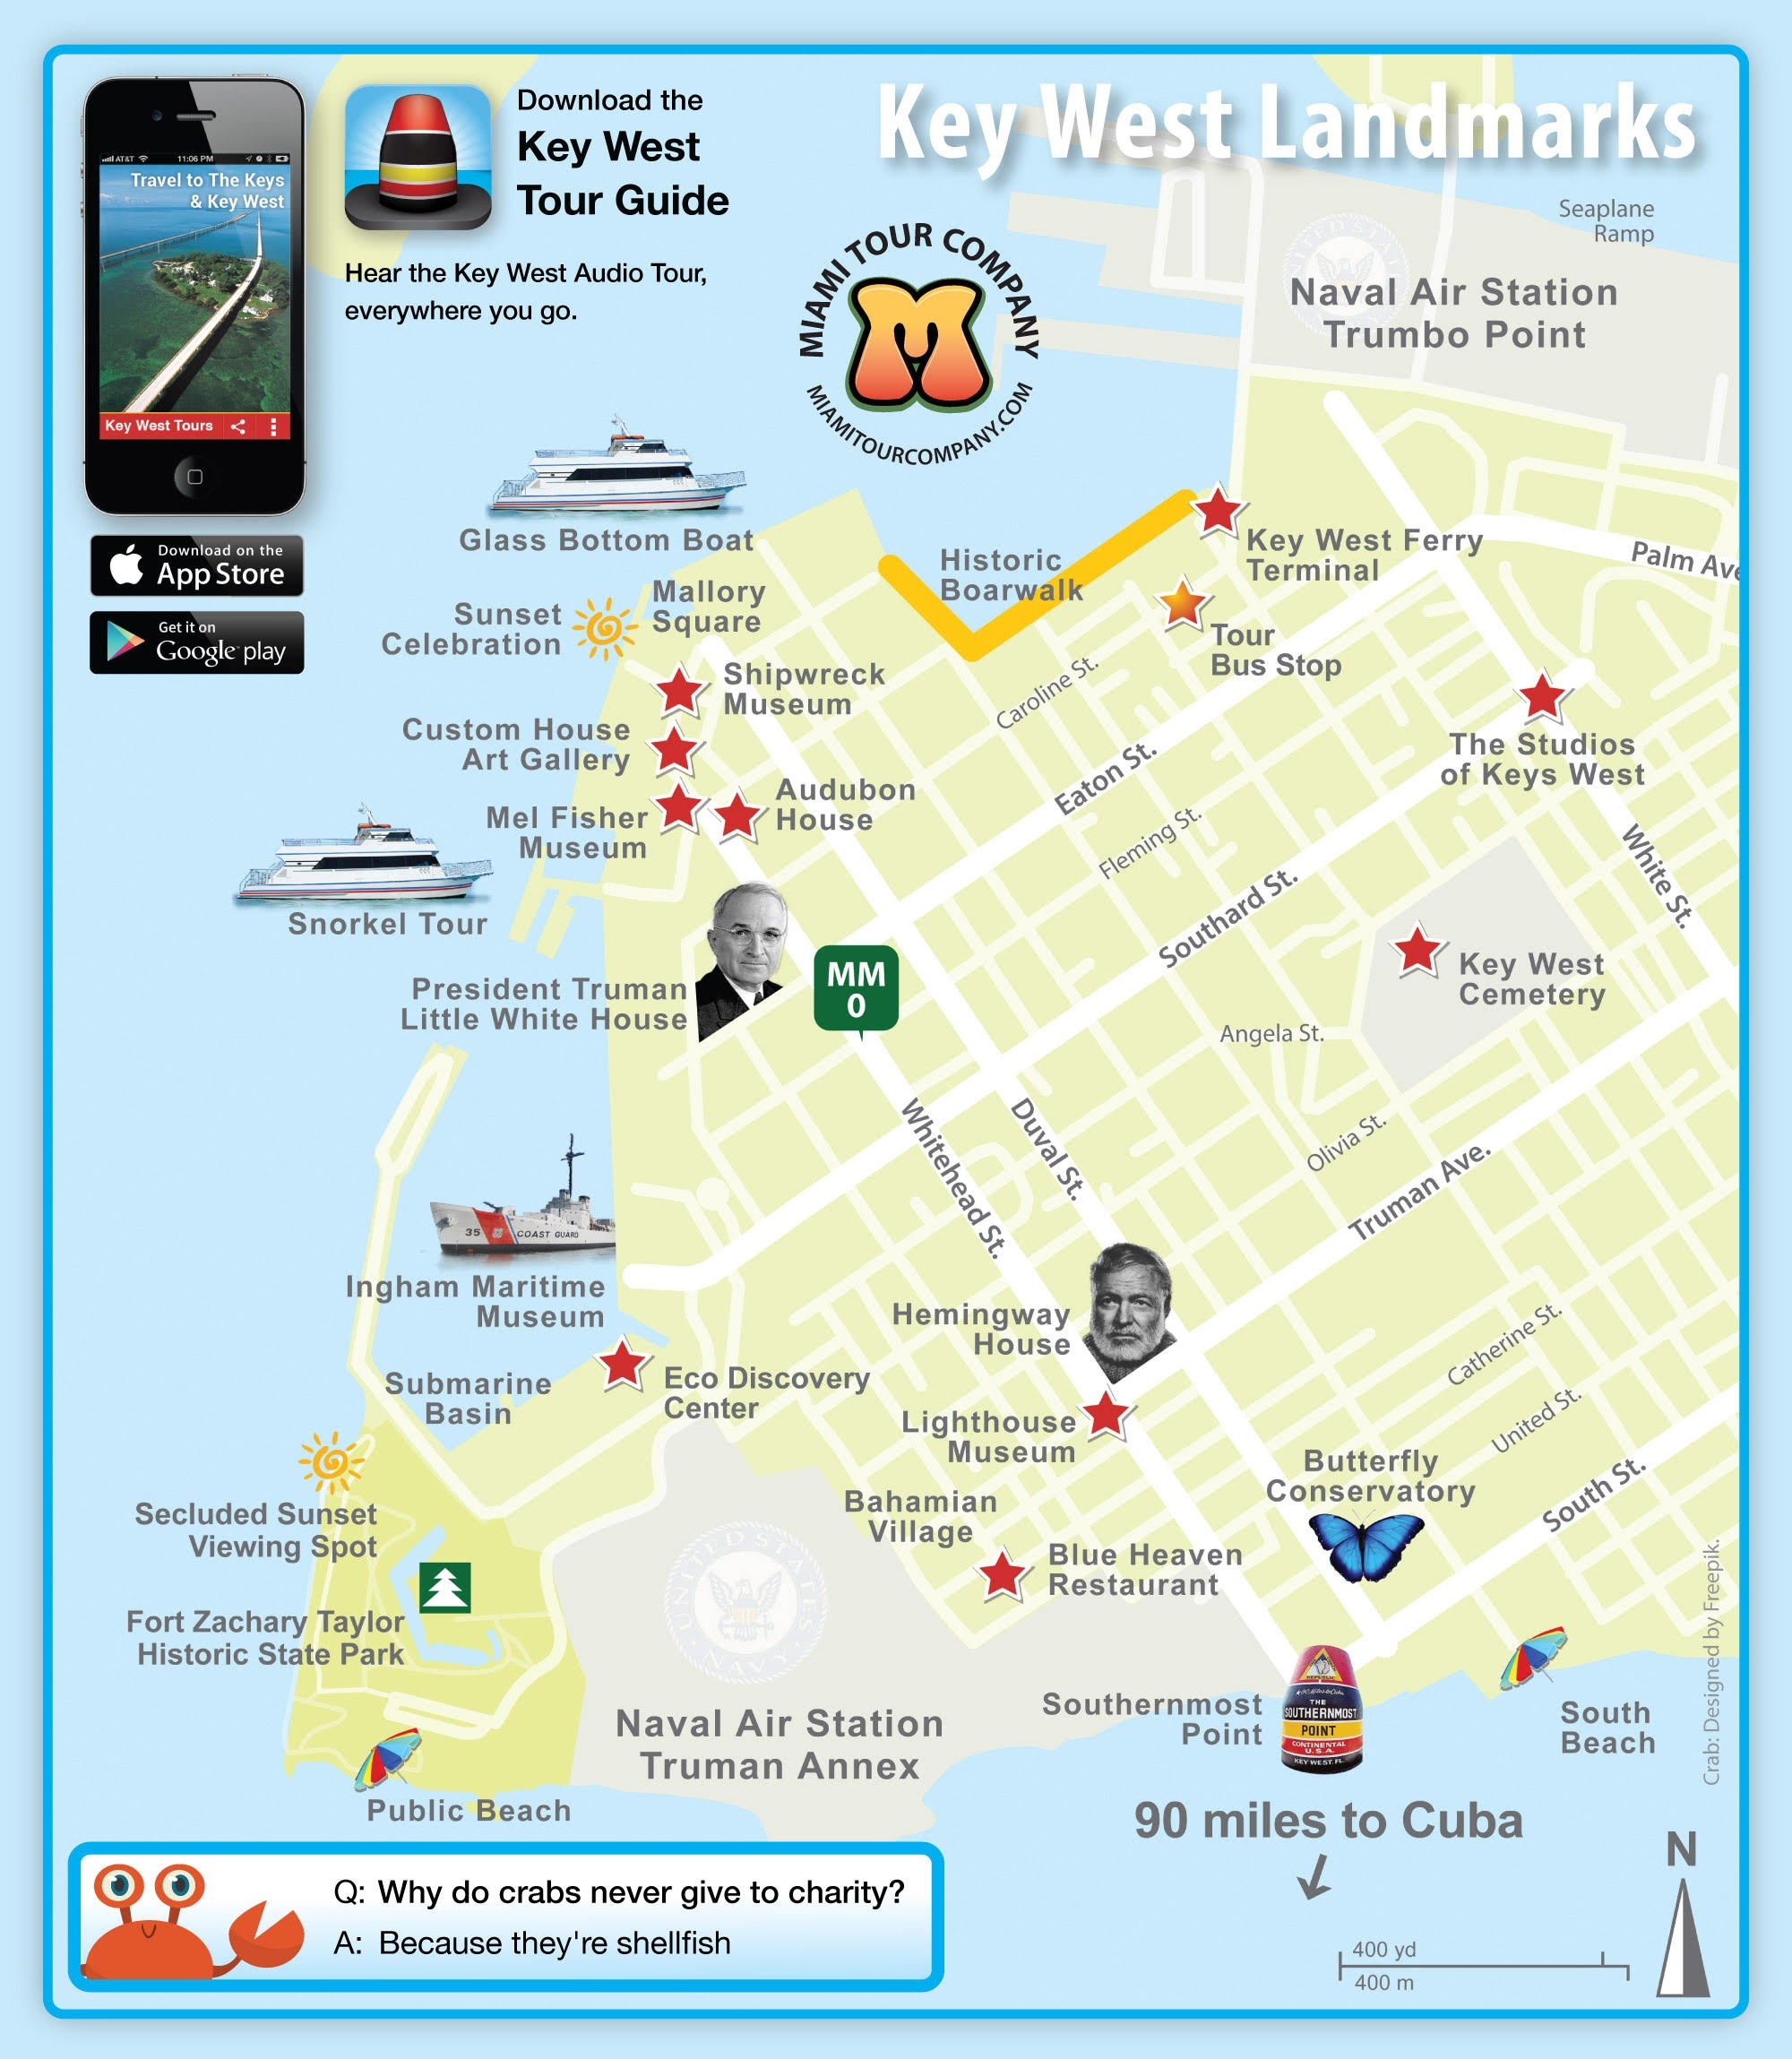 Map of Key West Landmarks